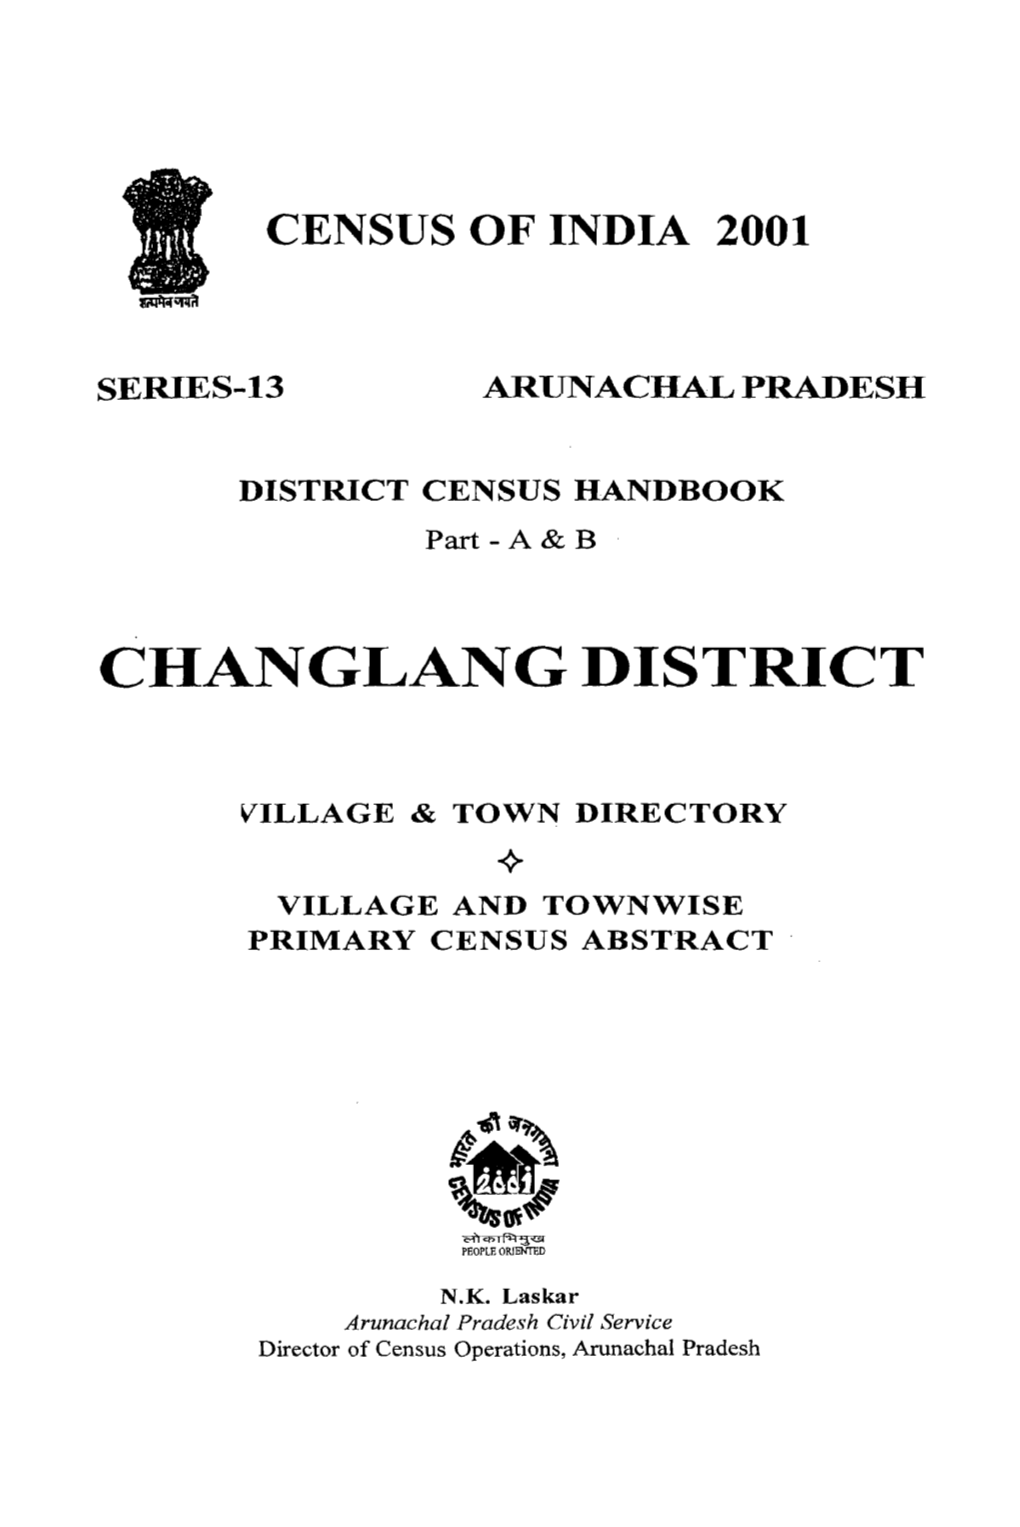 District Census Handbook, Changlang, Part XII-A & B, Series-13